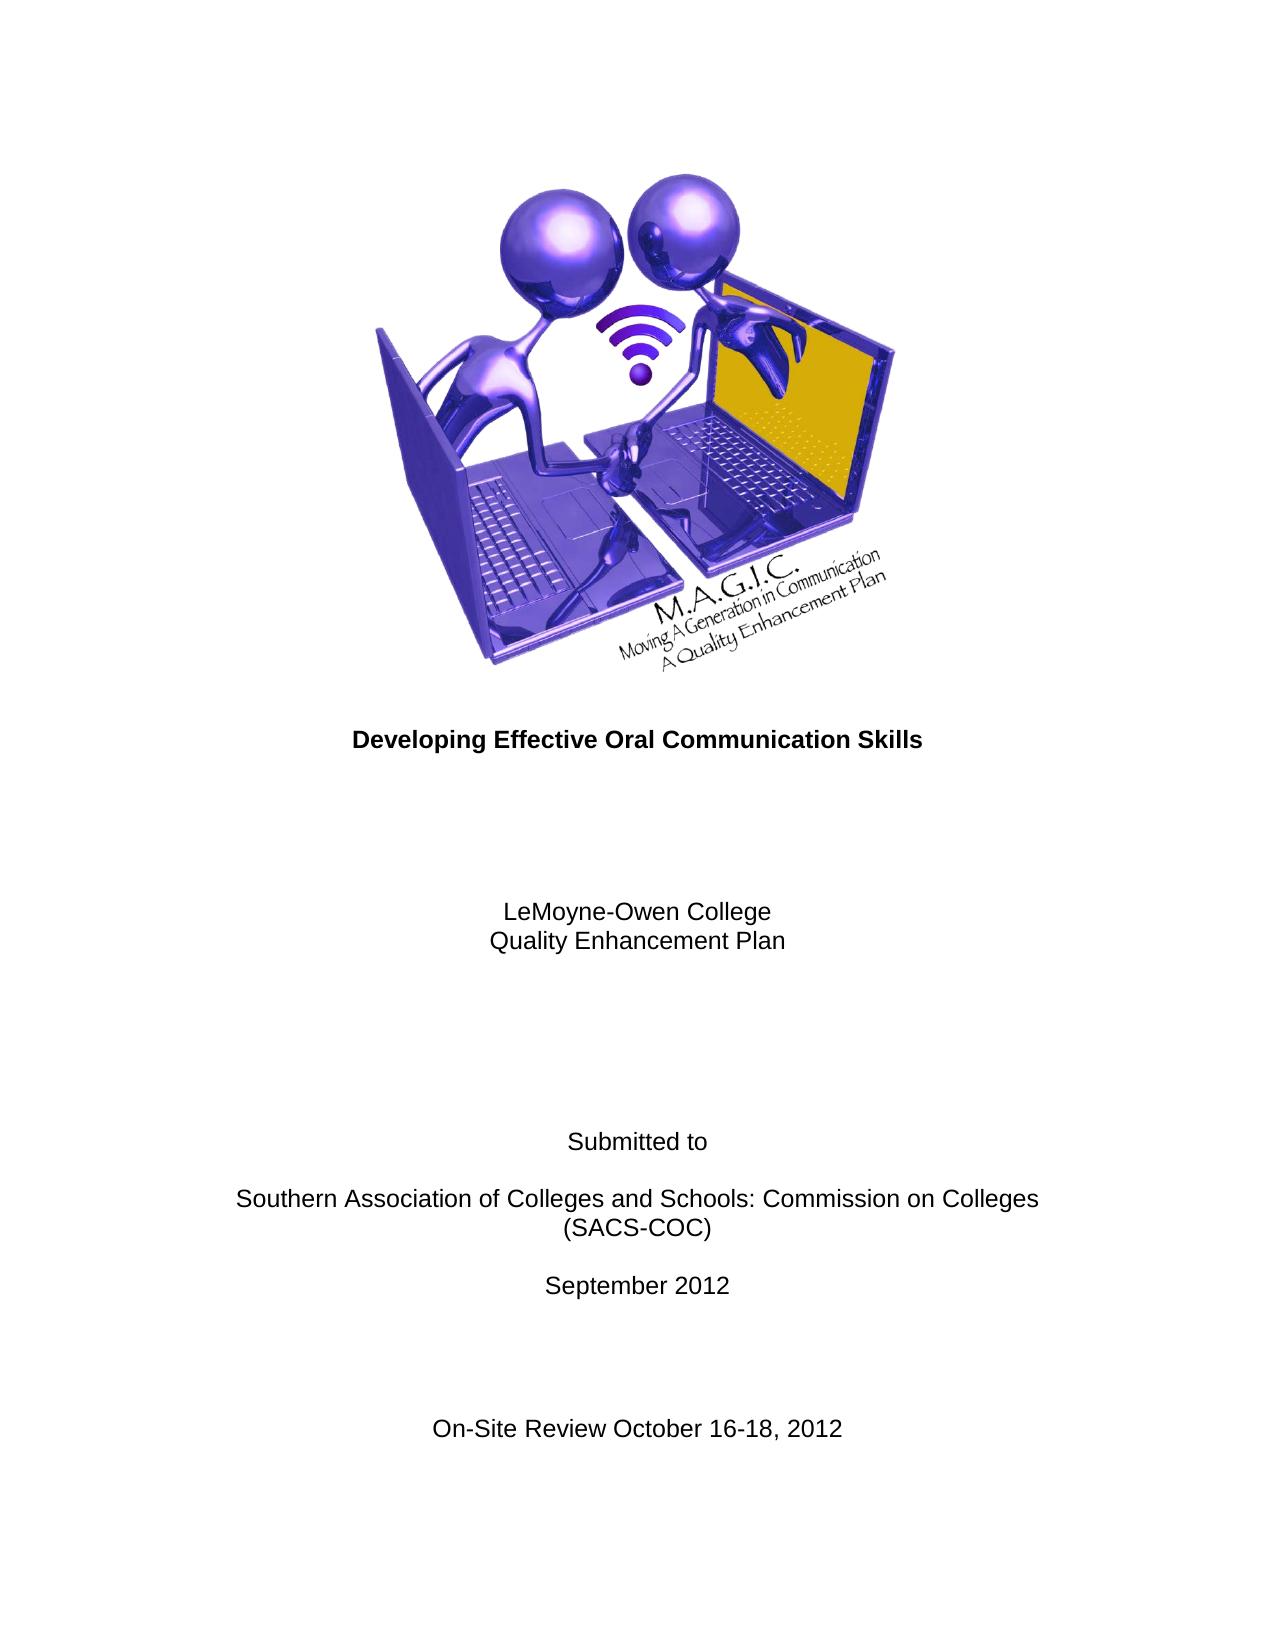 Developing Effective Oral Communication Skills 2012